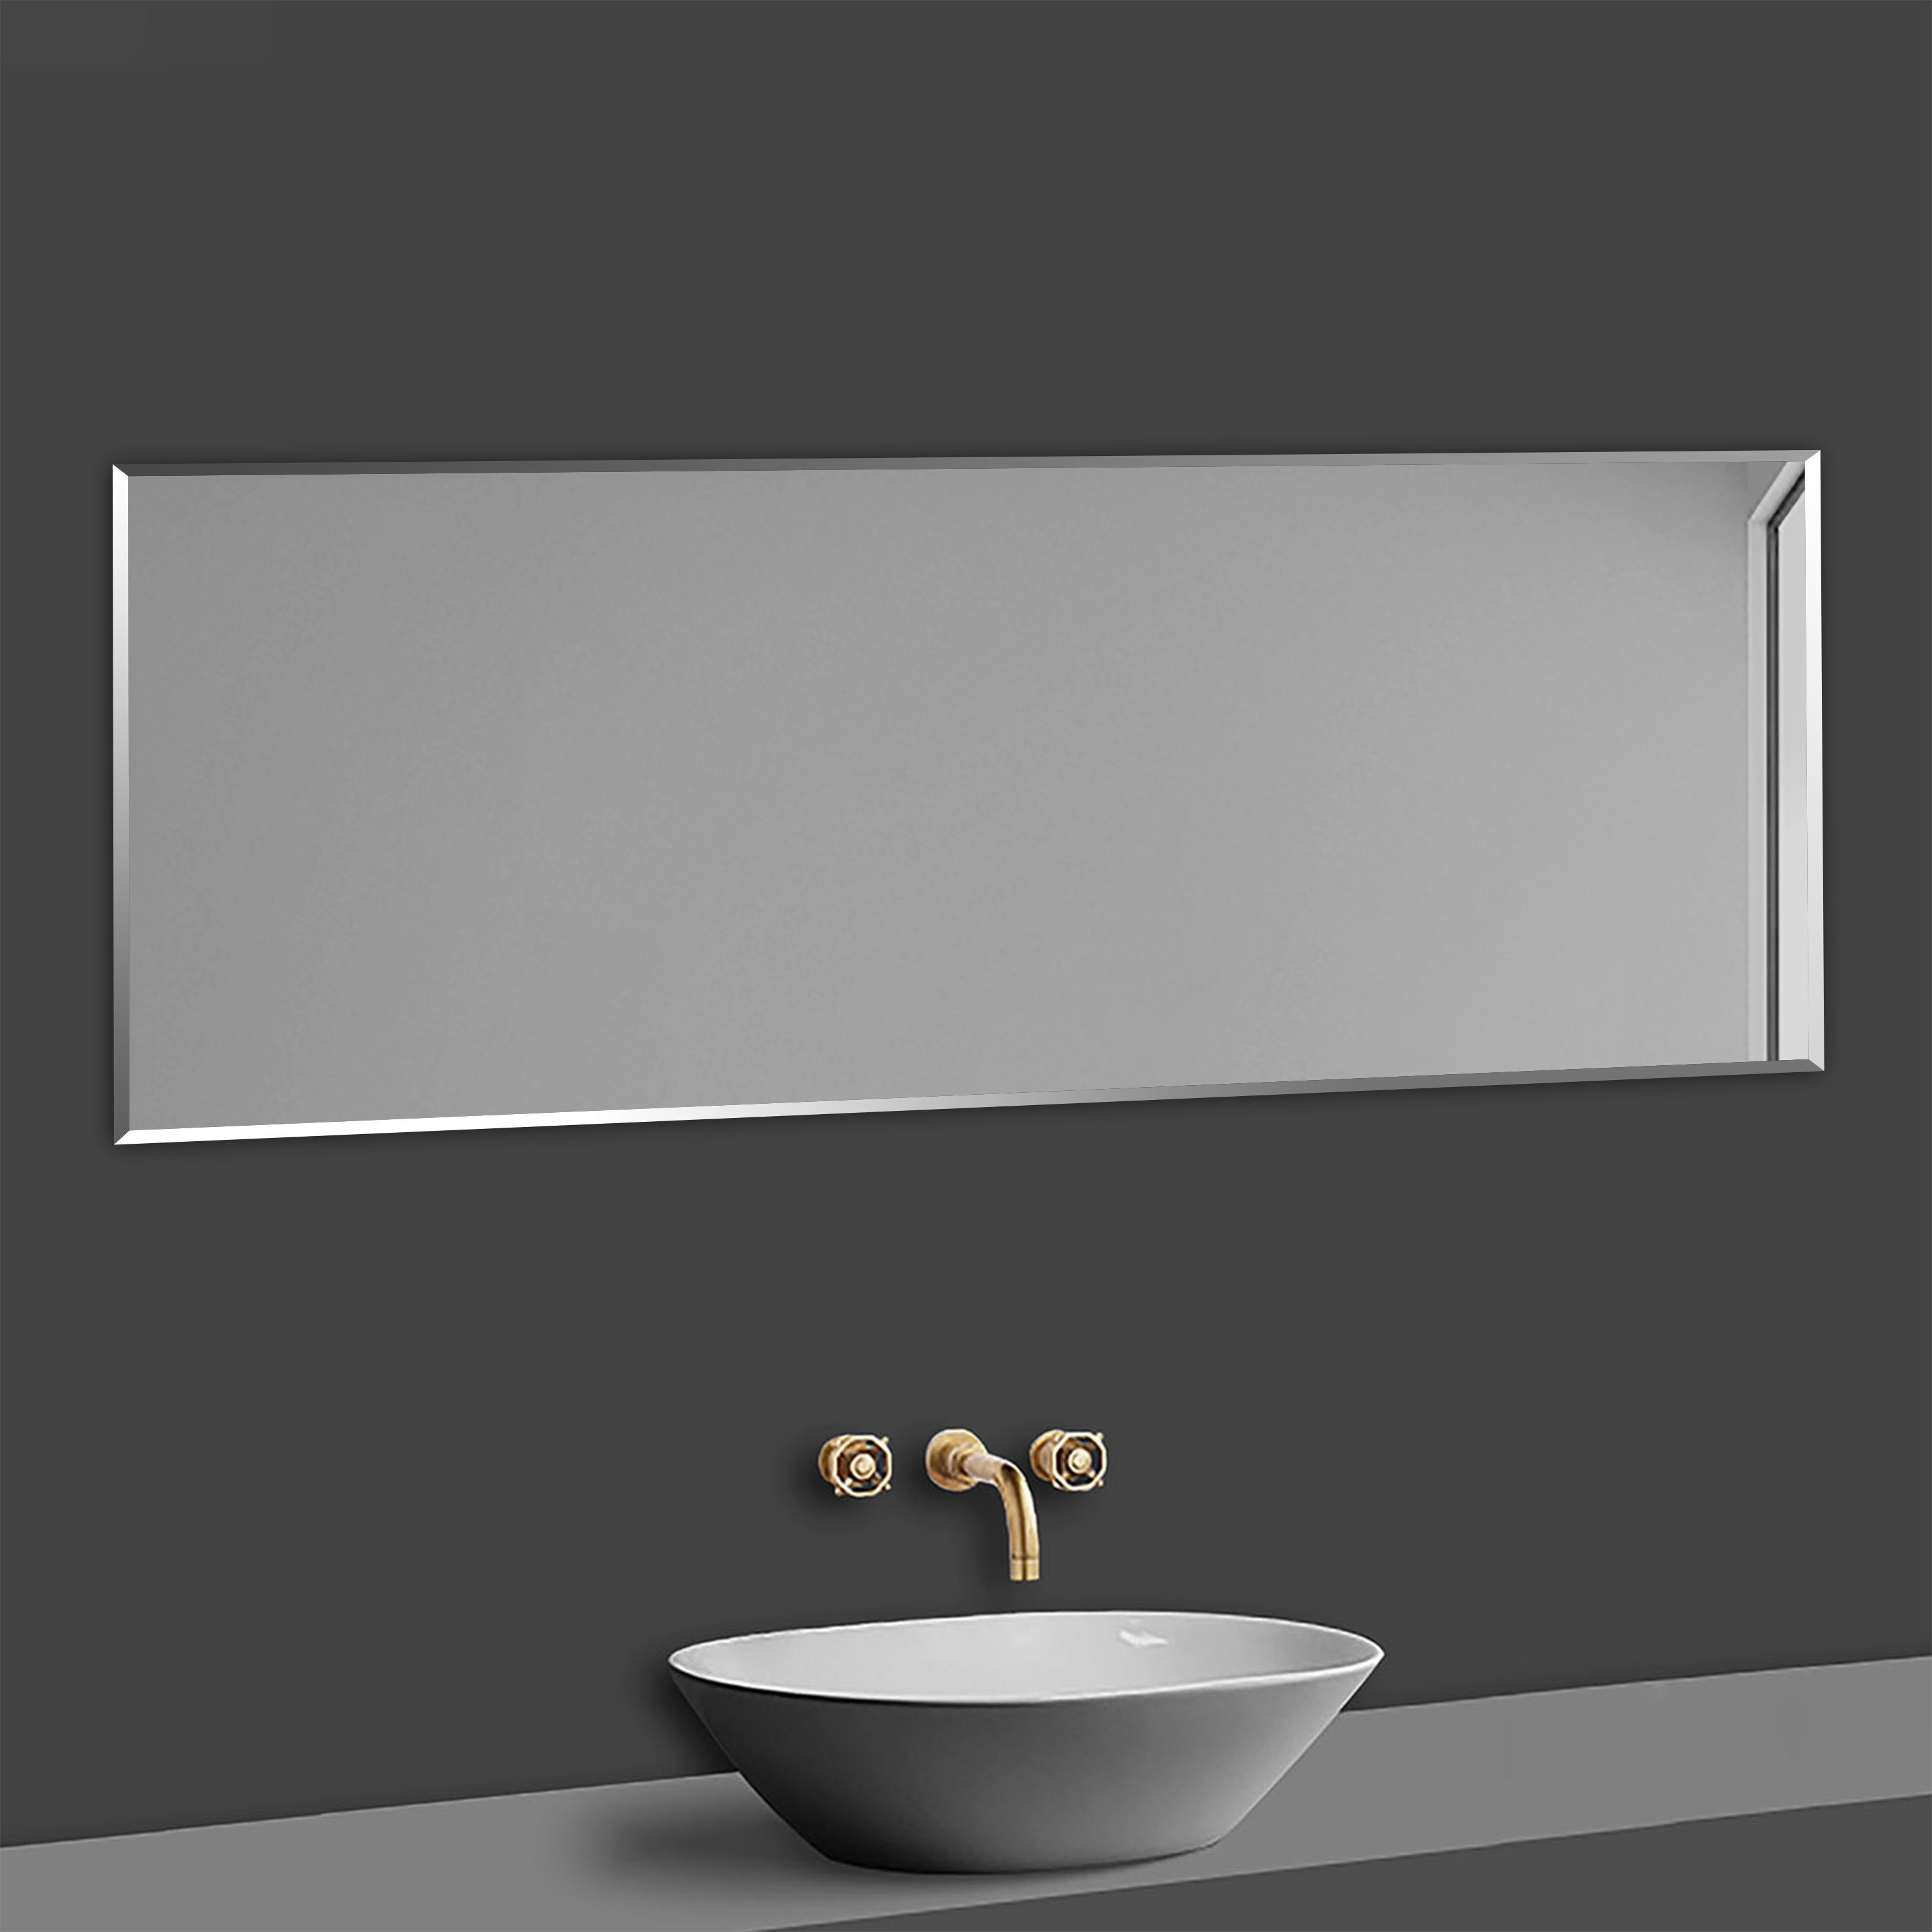 Wandspiegel horizontal/vertikal, Spiegel Badezimmerspiegel duschspa Faccettenspiegel Badspiegel Deko